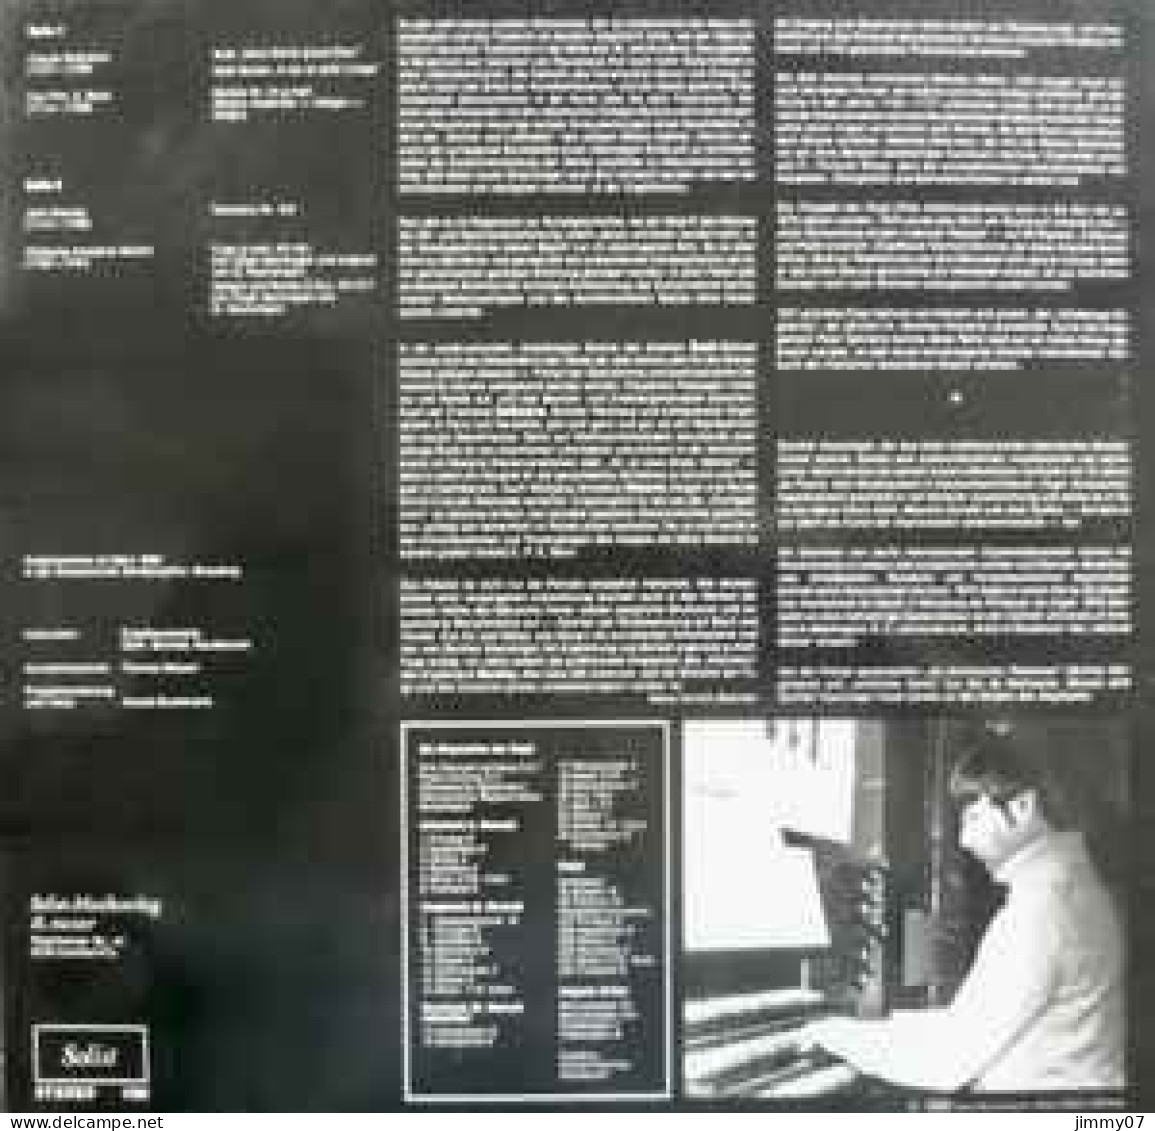 Günther Kaunzinger - Orgelmusik Des Rokoko (LP, Album) - Classique